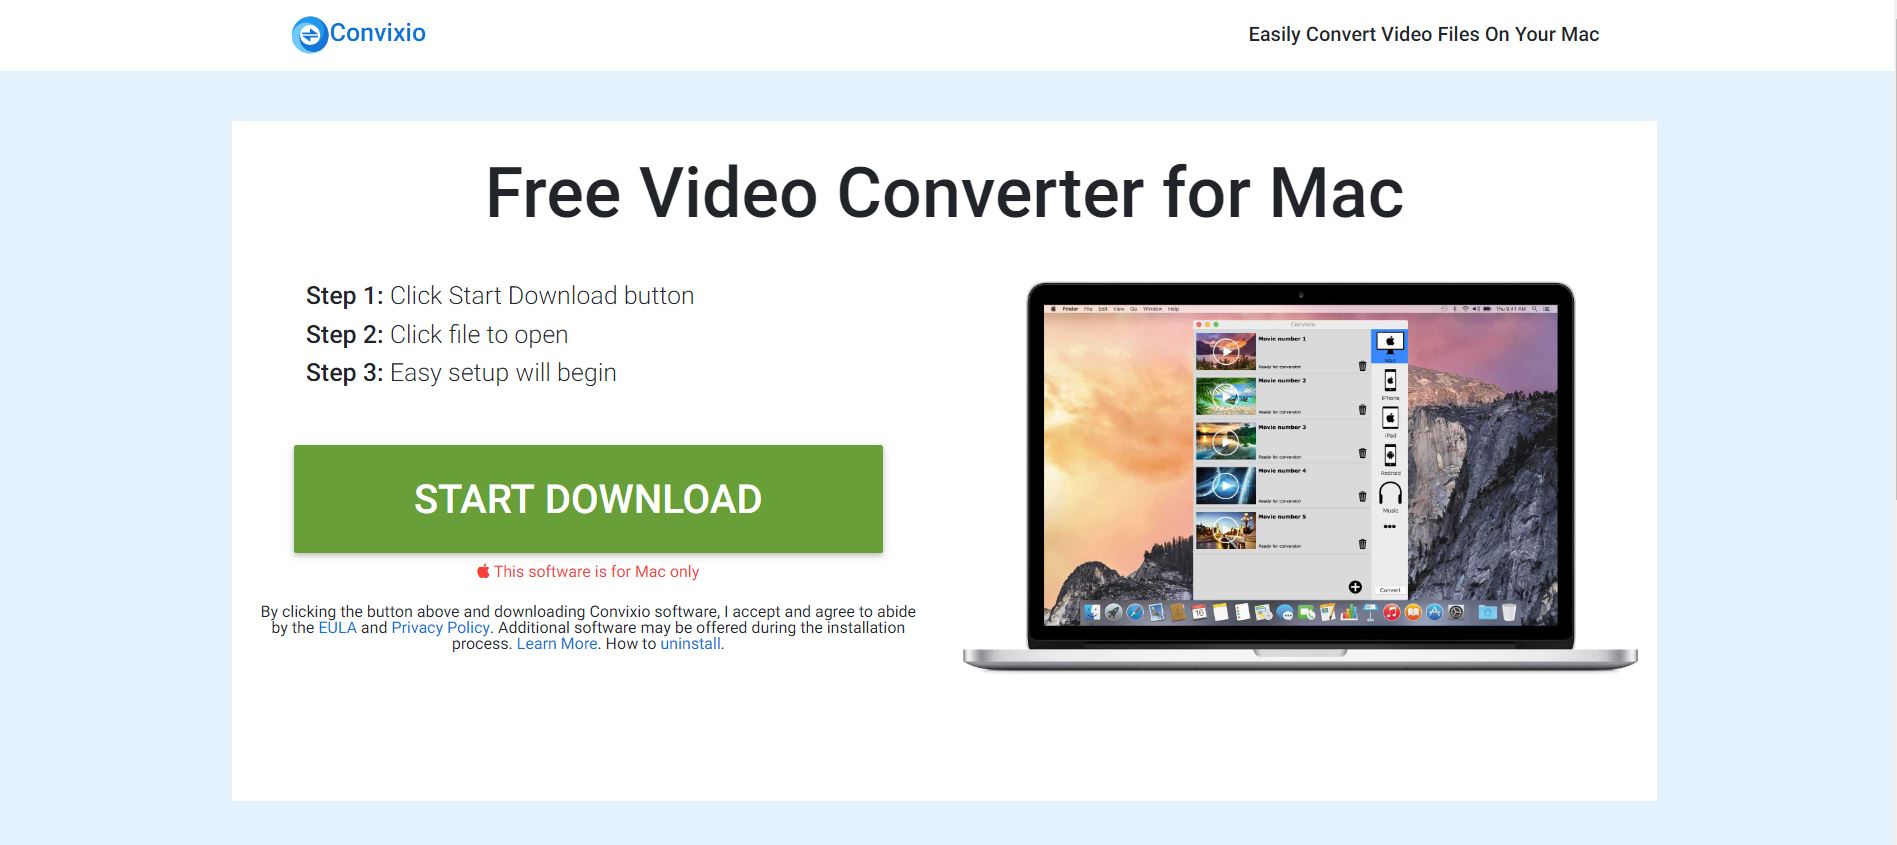 convixio converter for mac sensorstechforum guide